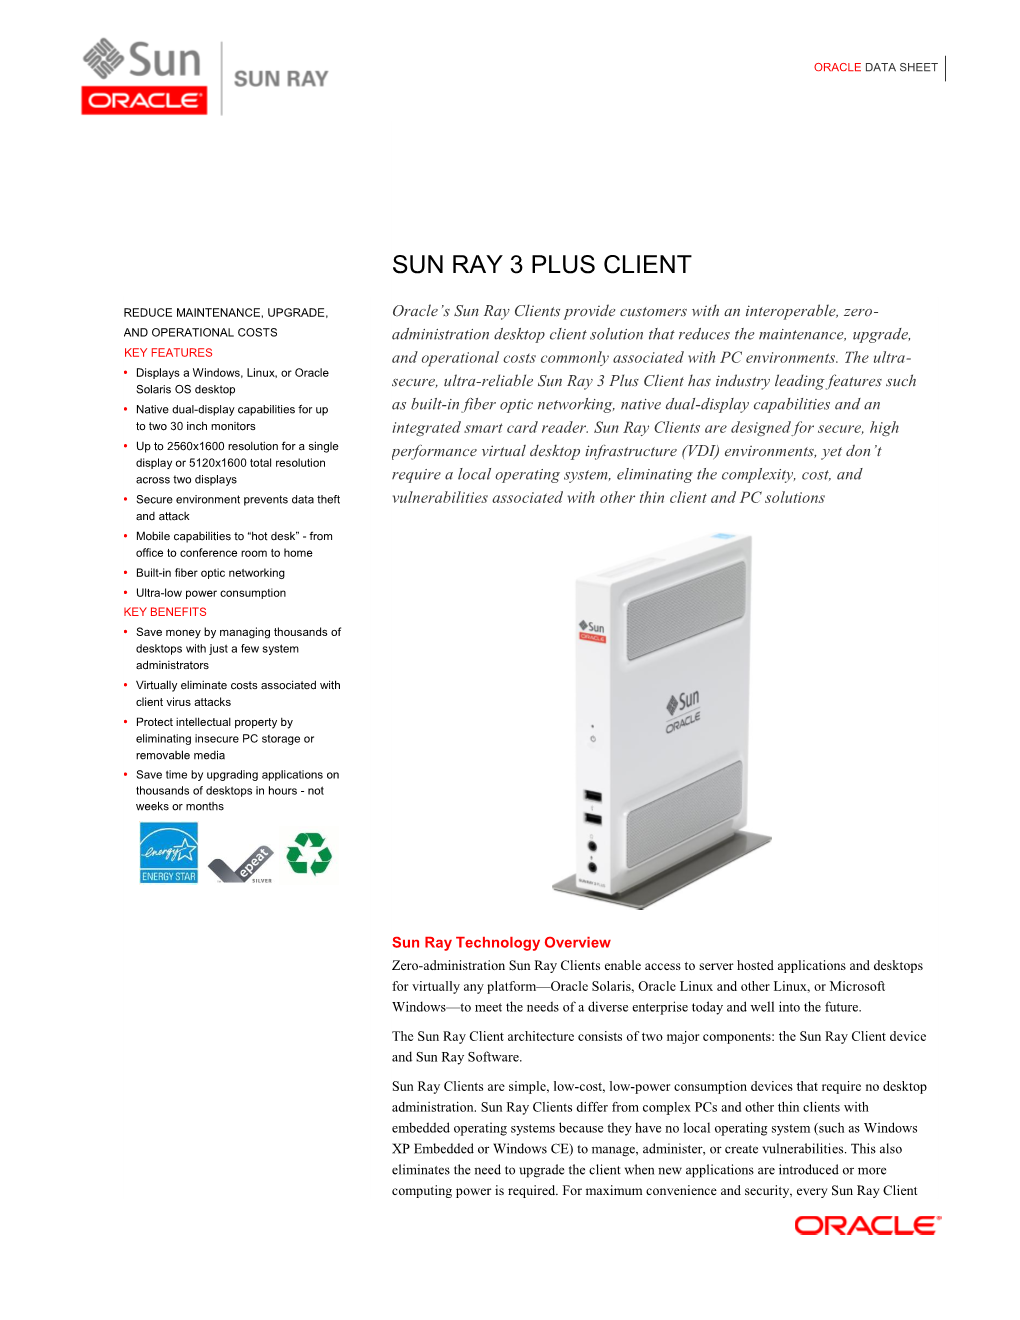 Sun Ray 3 Plus Client